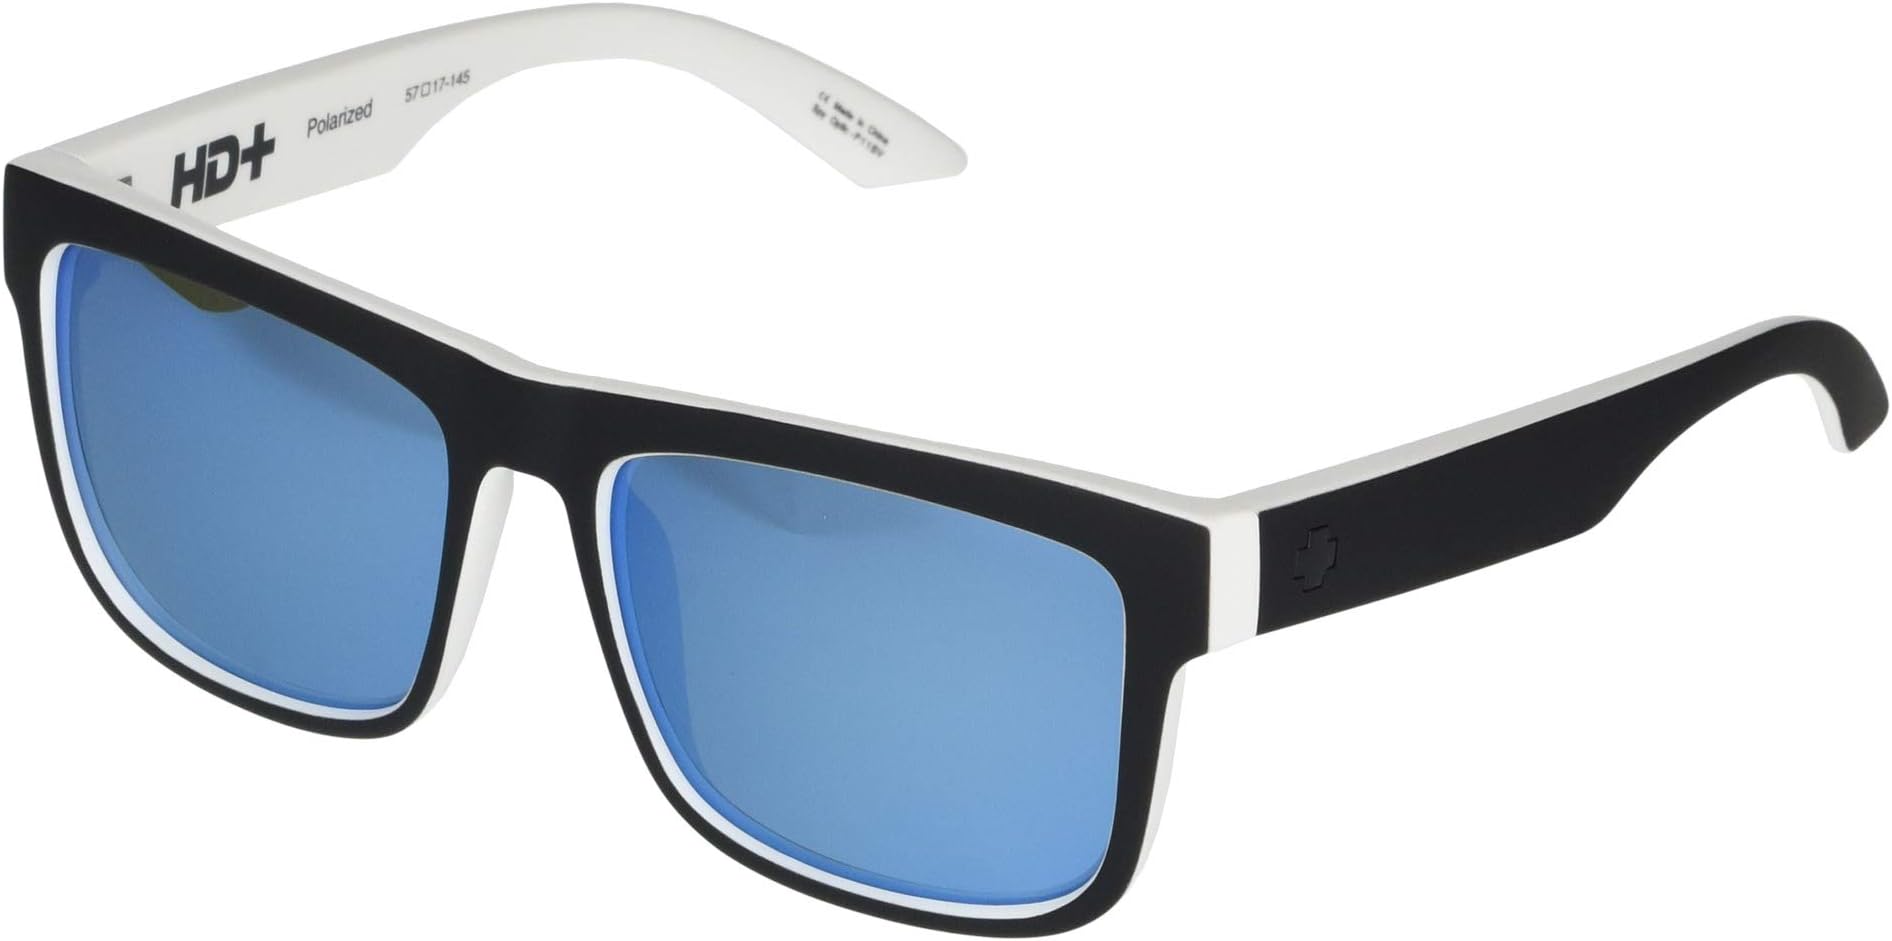 Солнцезащитные очки Discord Spy Optic, цвет Whitewall/HD Plus Gray Green Polar/Light Blue Spectra Mirror